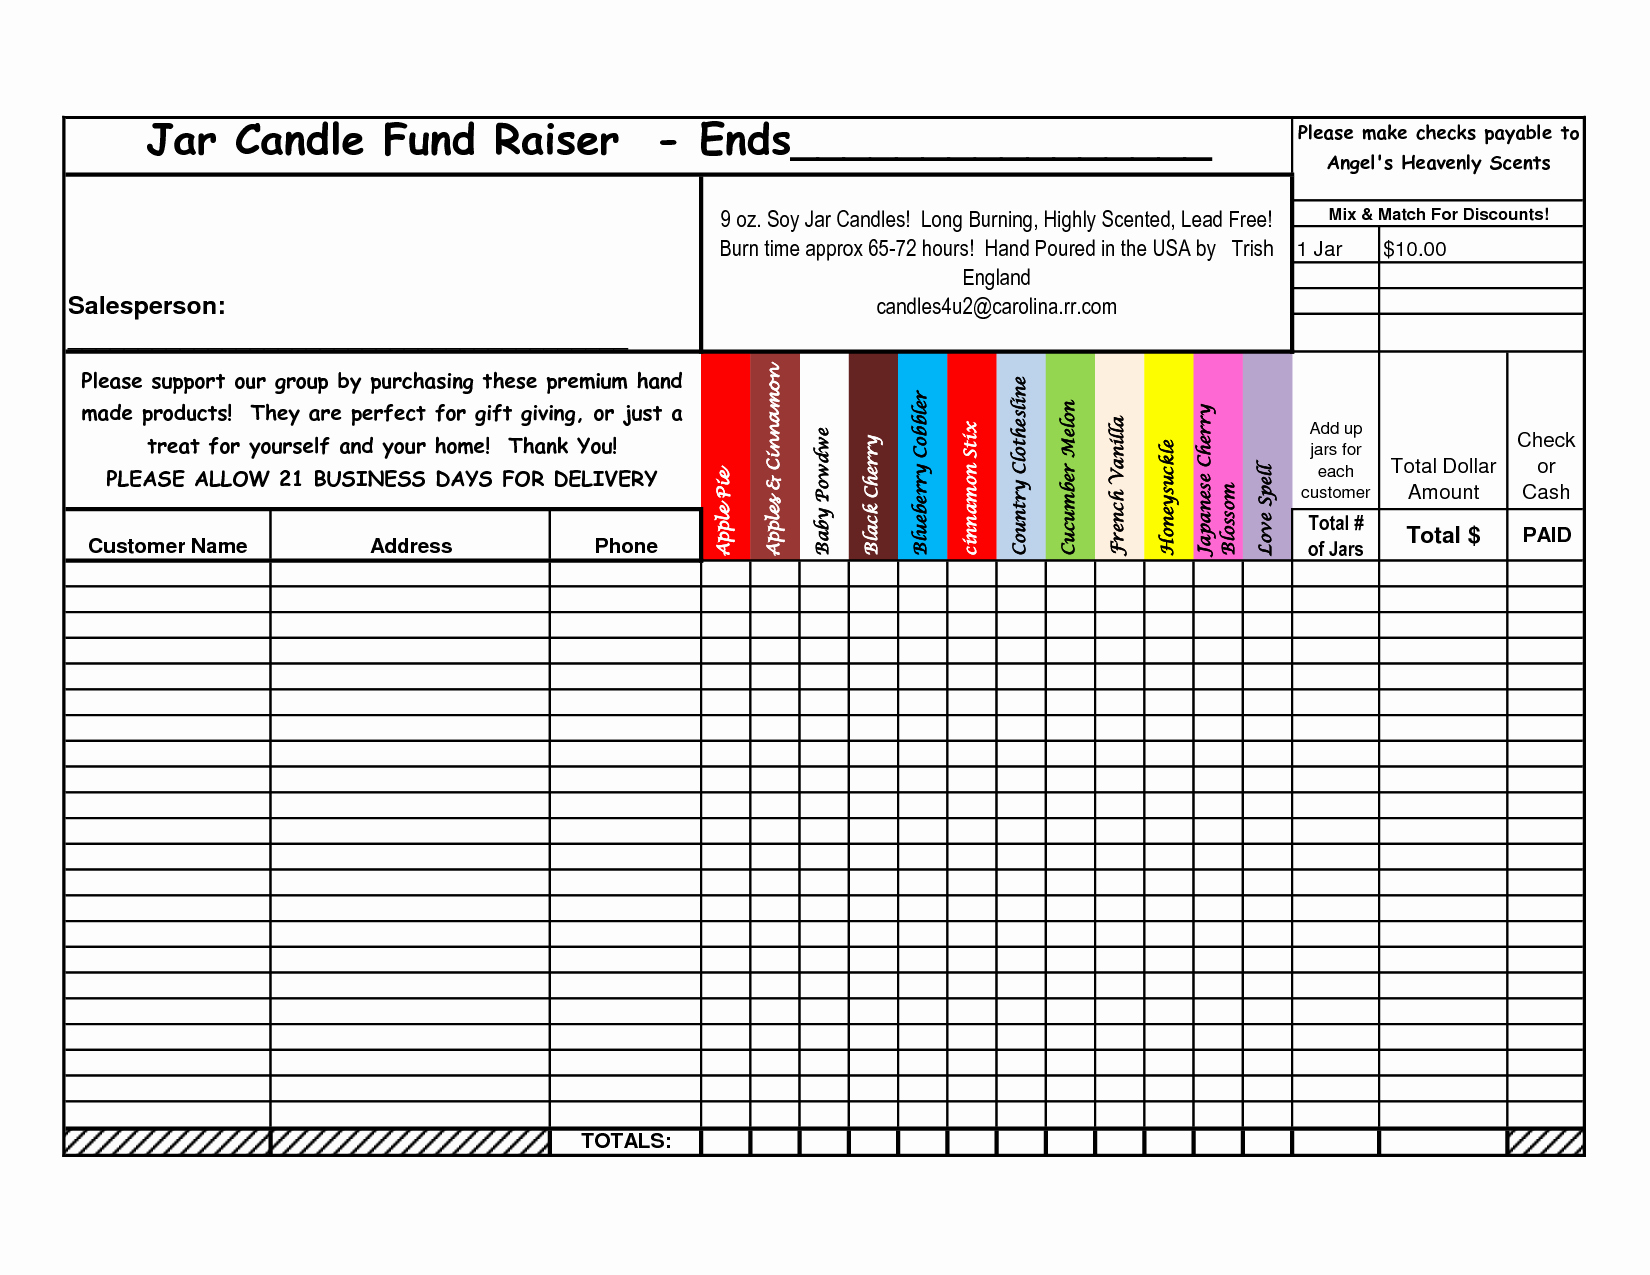 Fundraiser order form Template Unique Fundraiser order form Template Excel the Ultimate